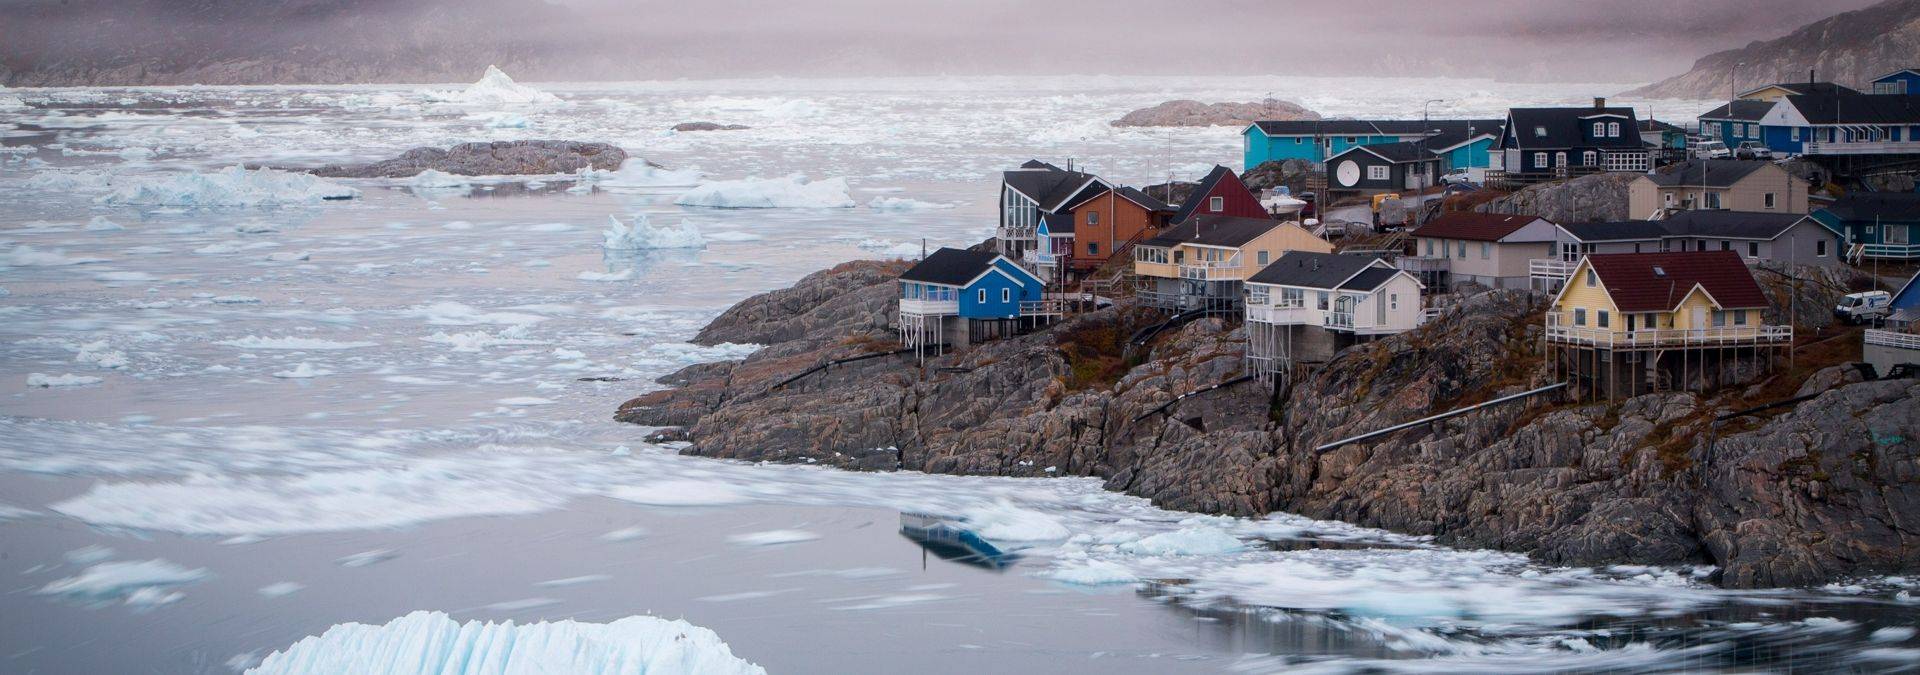 Ilulissat - Photo by Paul Zizka and Visit Greenland